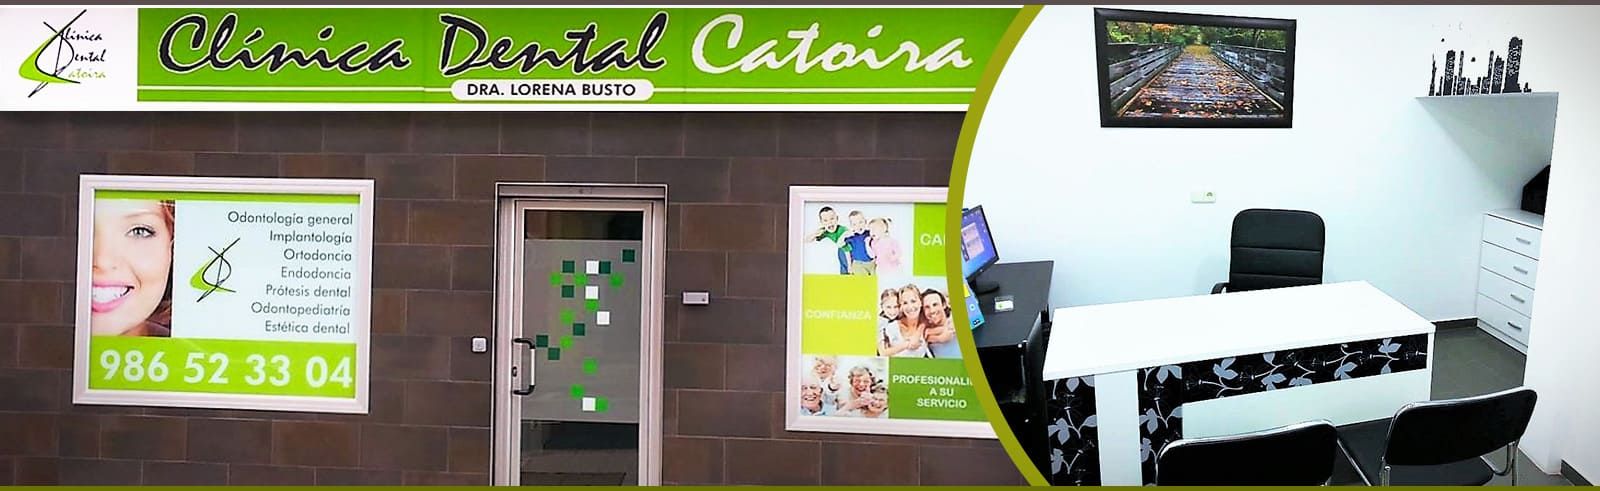 Clínica Dental Catoira Dra. Lorena Busto banner 3